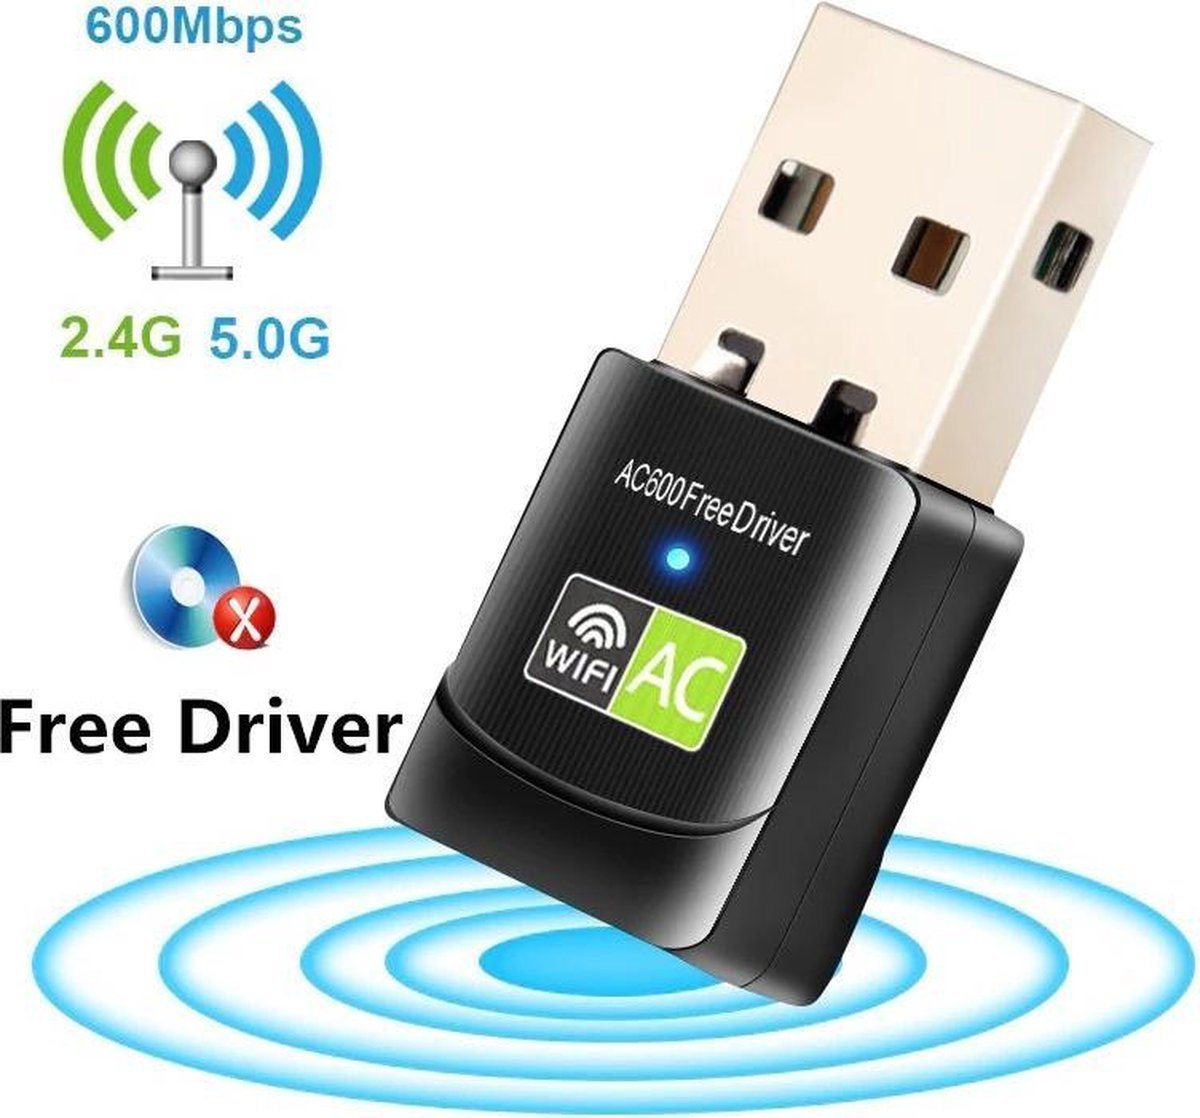 DrPhone W3 Pro - Driver Free - 600Mbps - Dual Band - USB WiFi - Plug en Play WiFi Adapter - Zonder Installatie